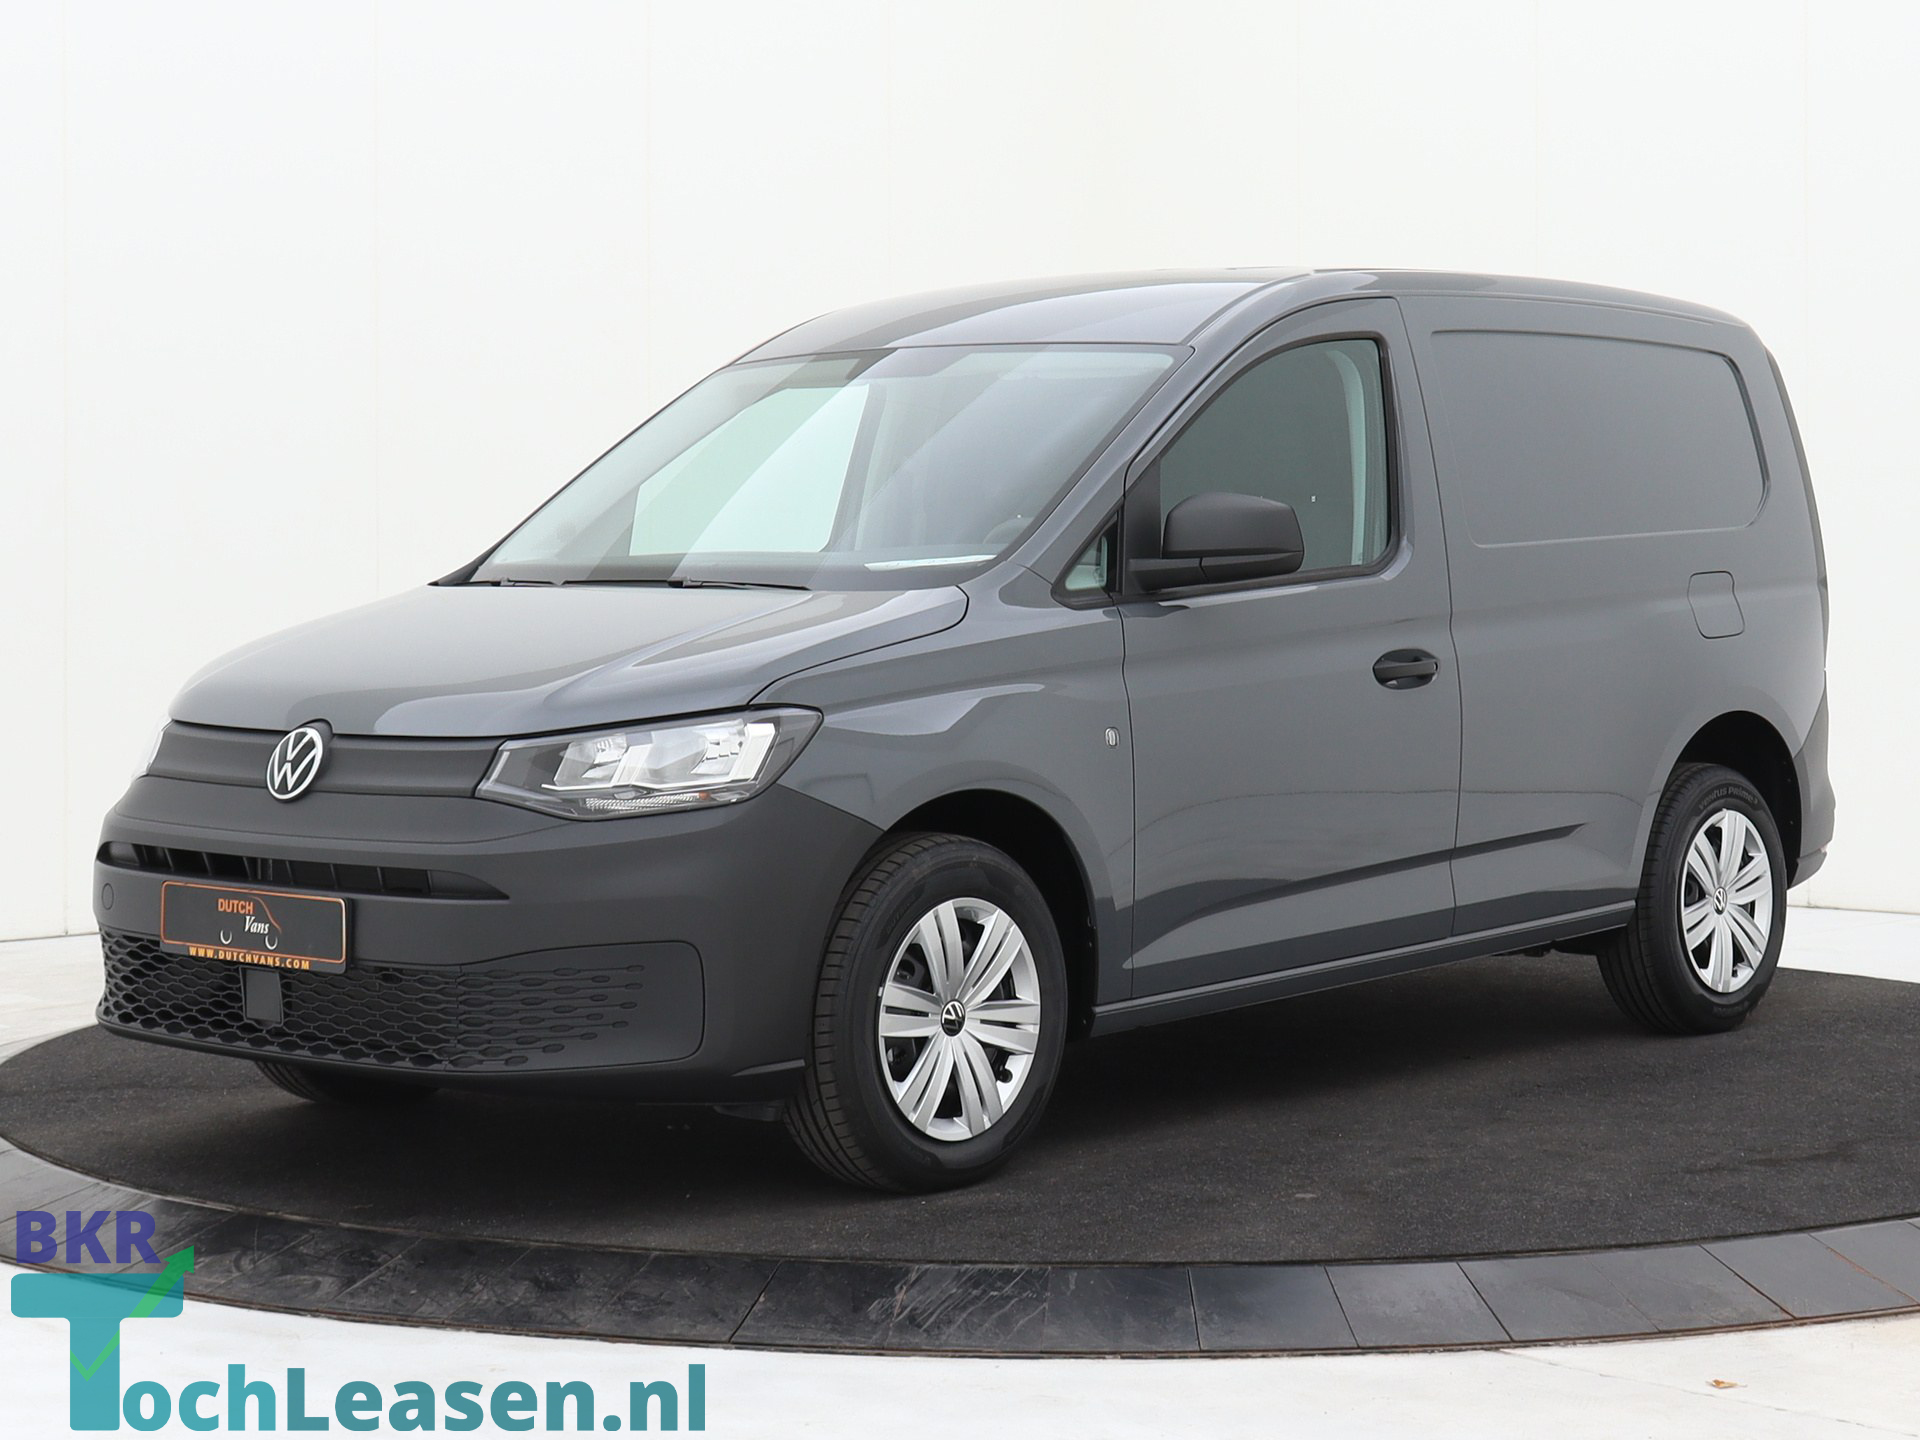 BKR toch leasen - Volkswagen Caddy - Grijs 18